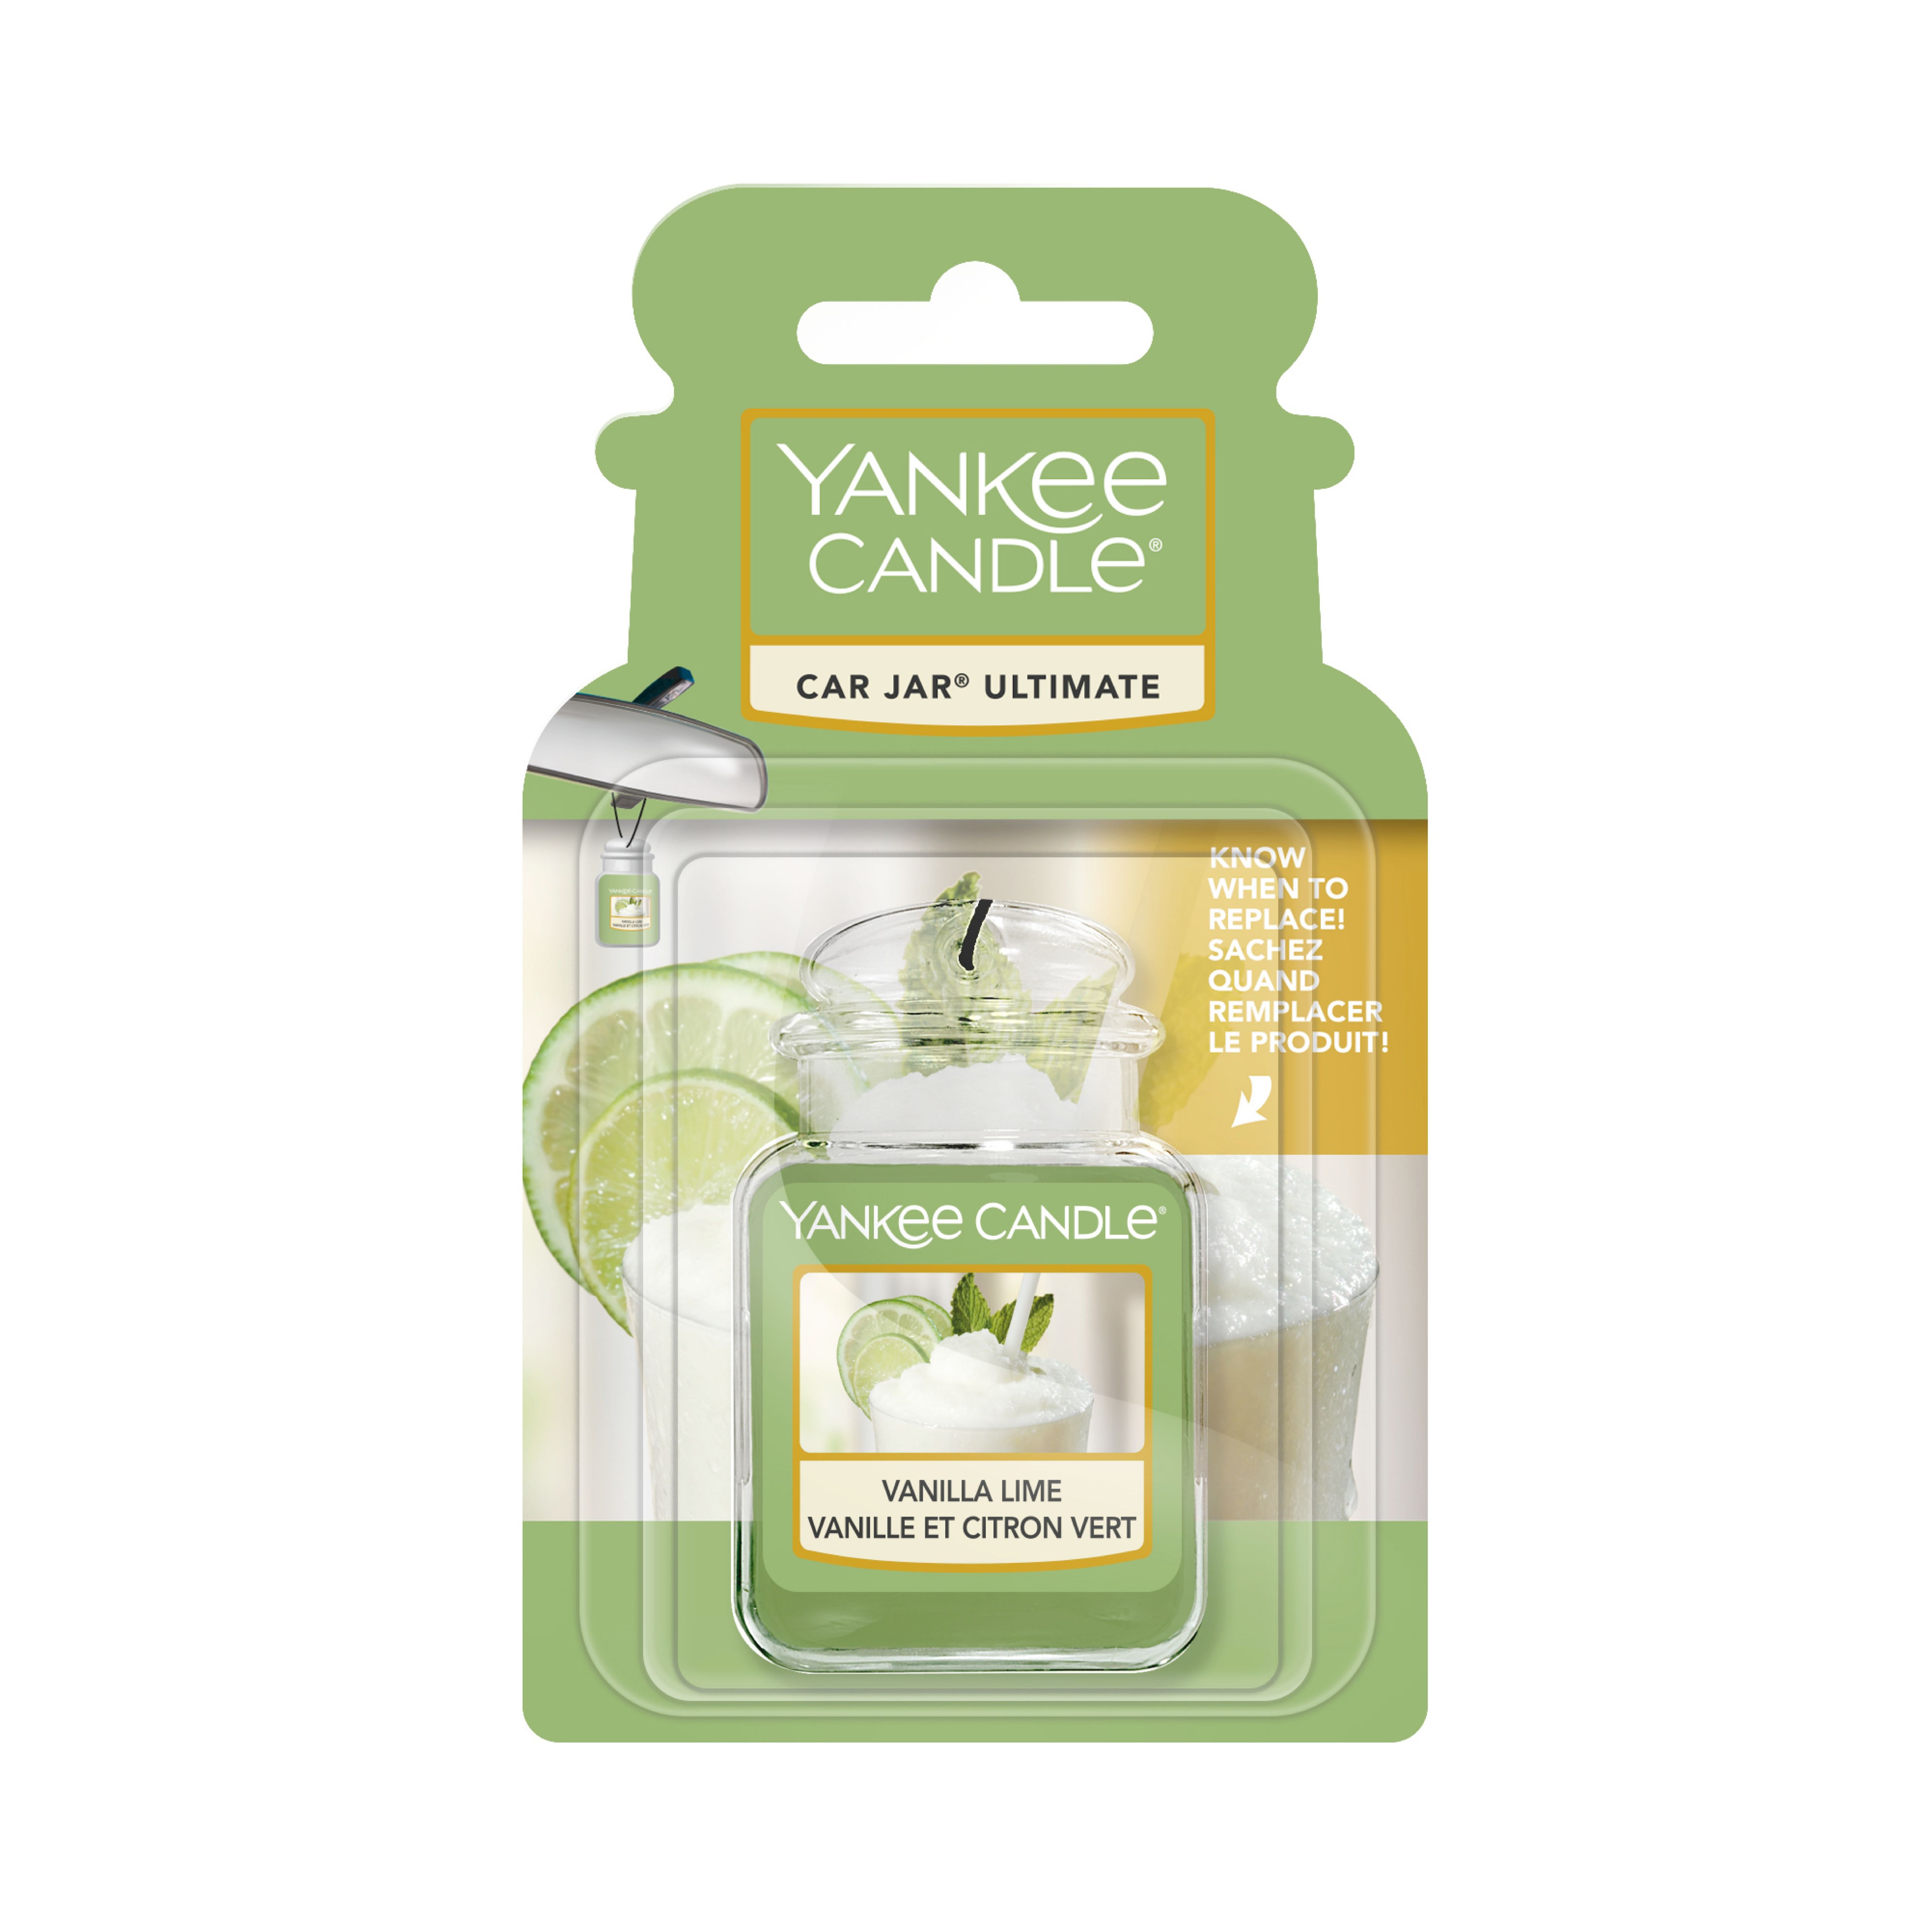 Yankee Candle Vanilla Lime Autoduft 12V Diffuser Nachfüller